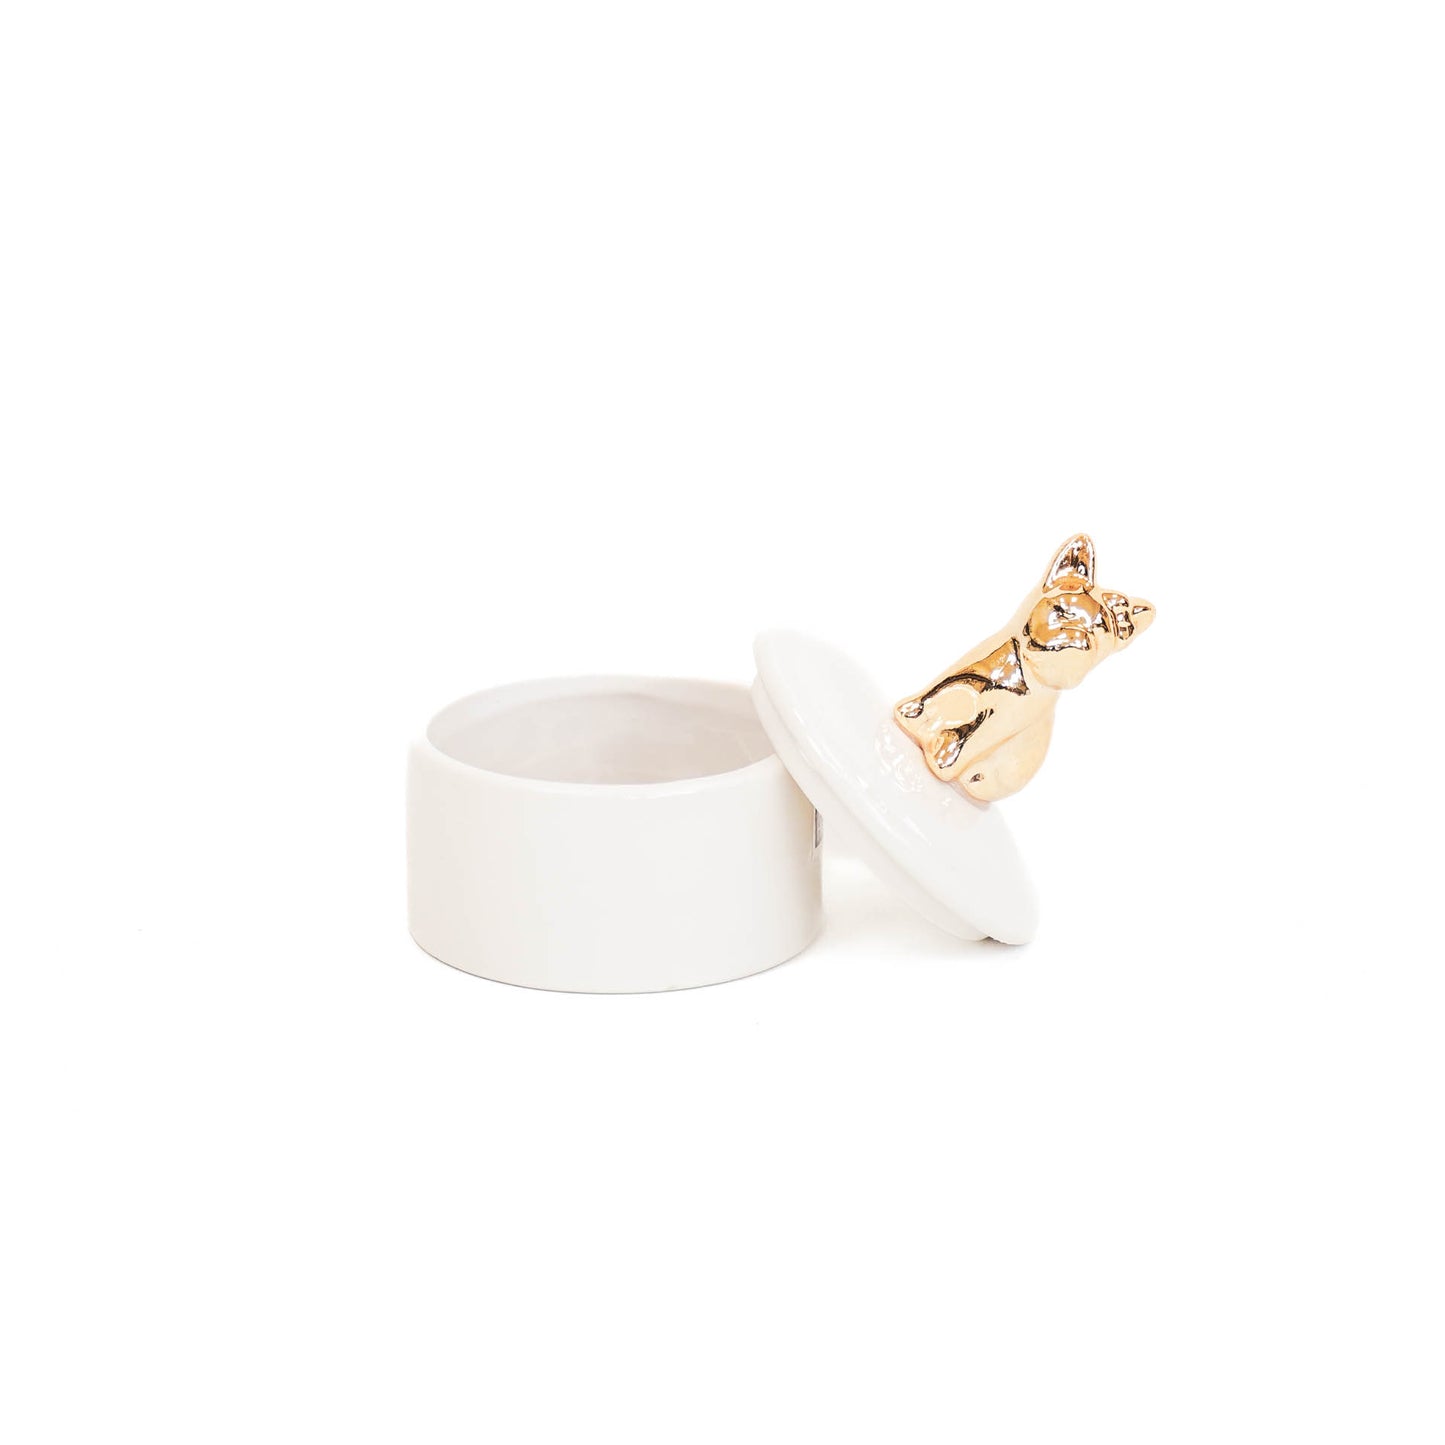 HV White Jar with Golden Dog-6x6x8